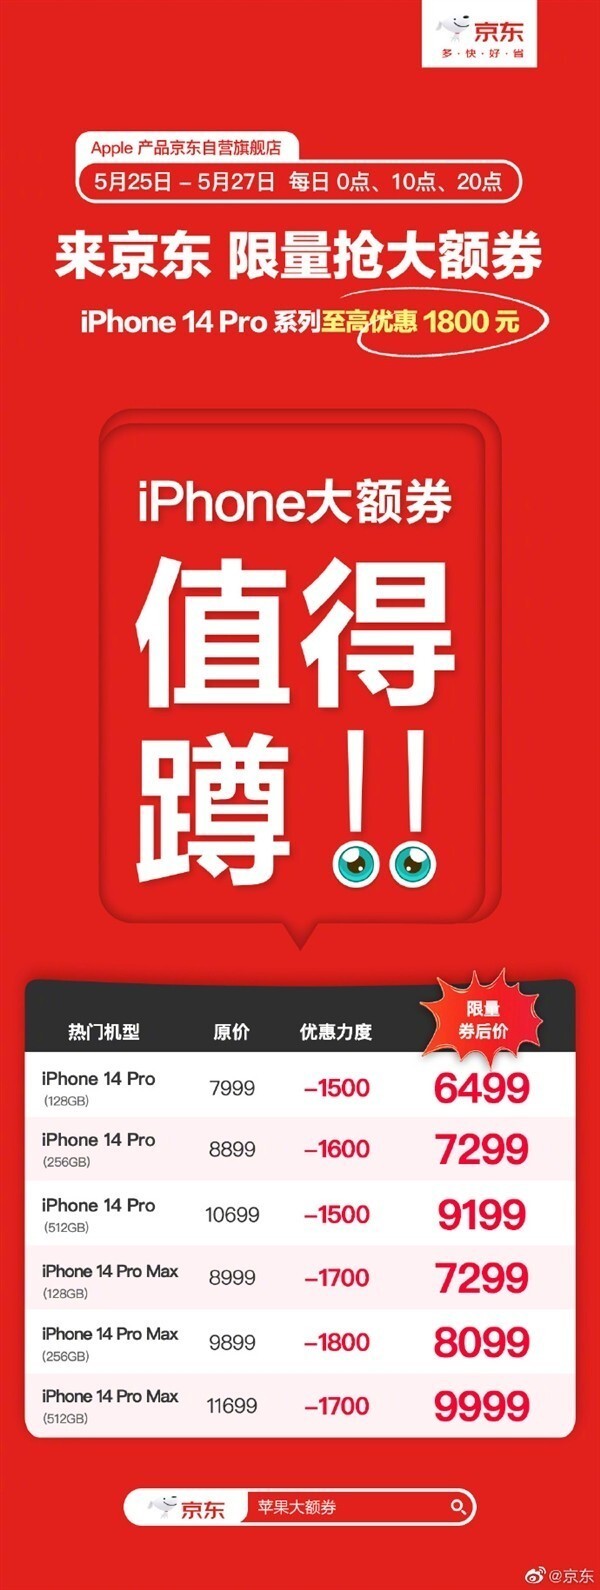 1800 iPhone 14 Pro6499